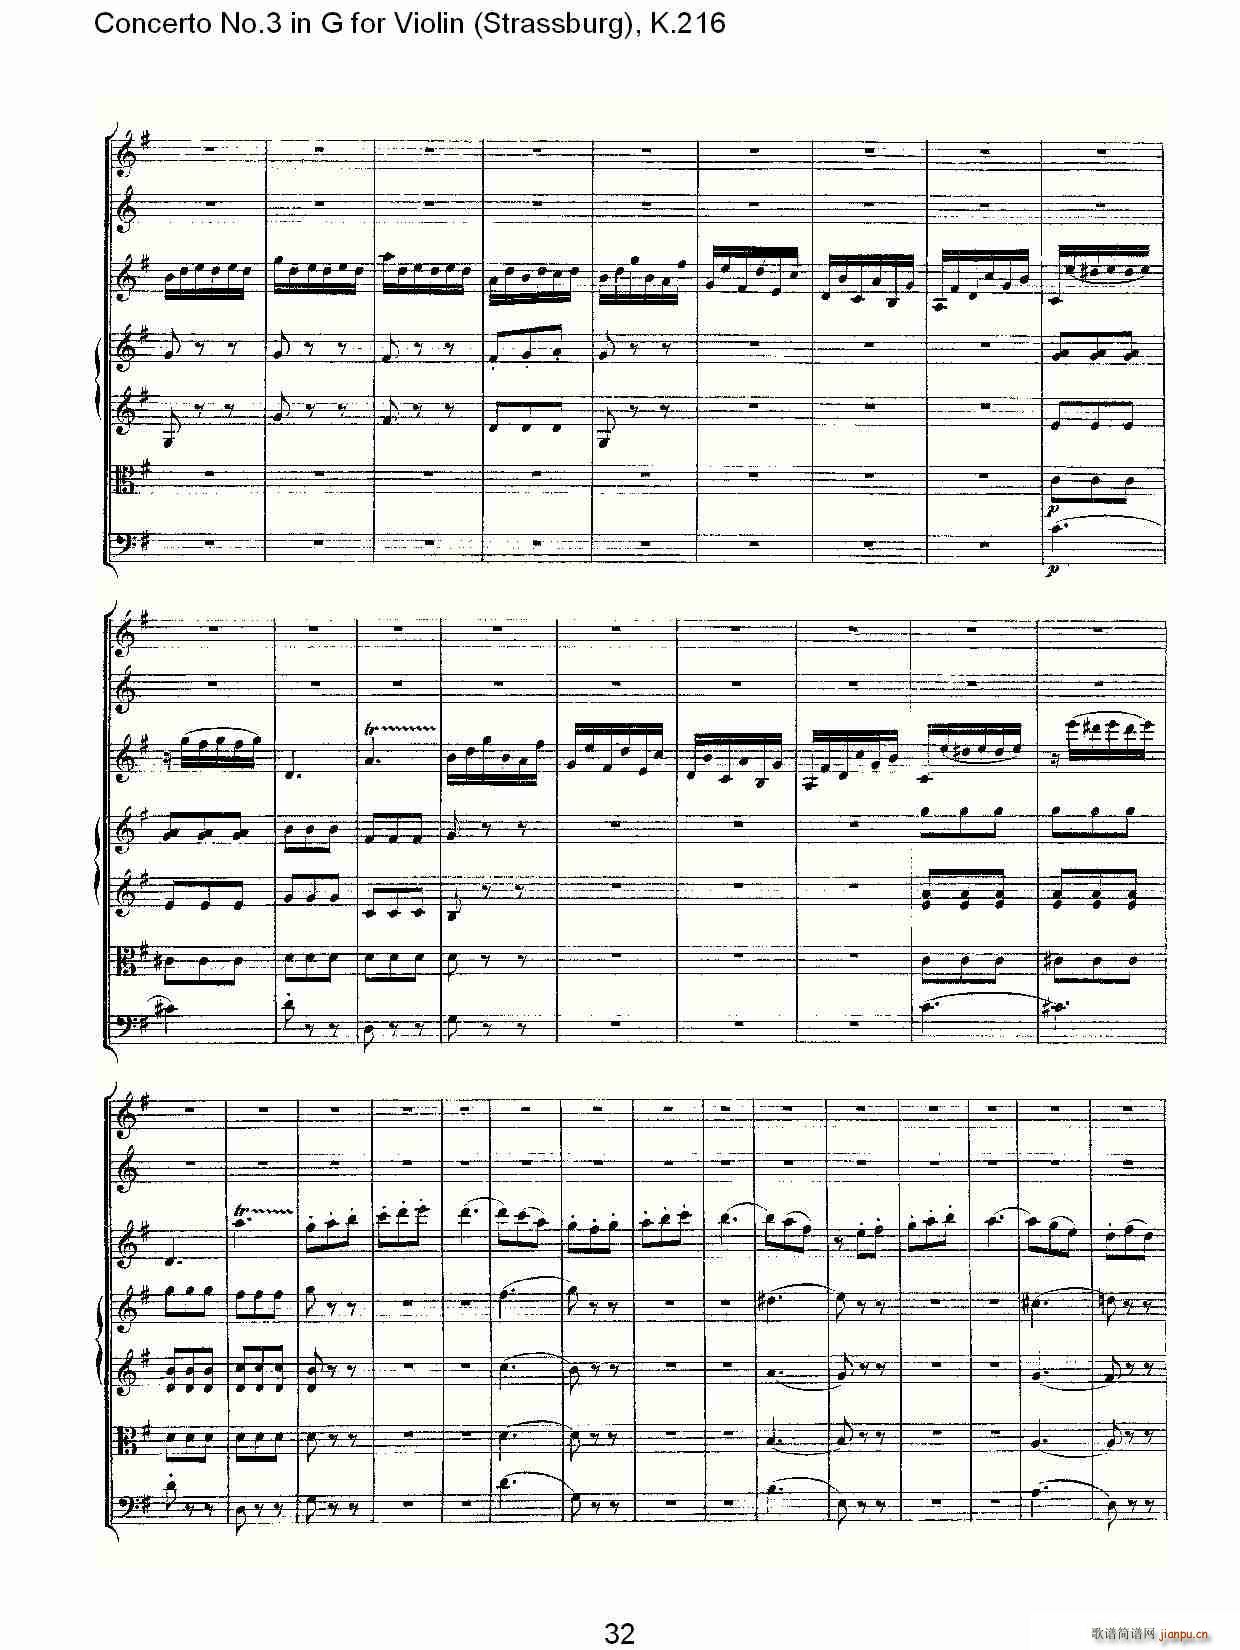 Concerto No.3 in G for Violin K.216(С)32